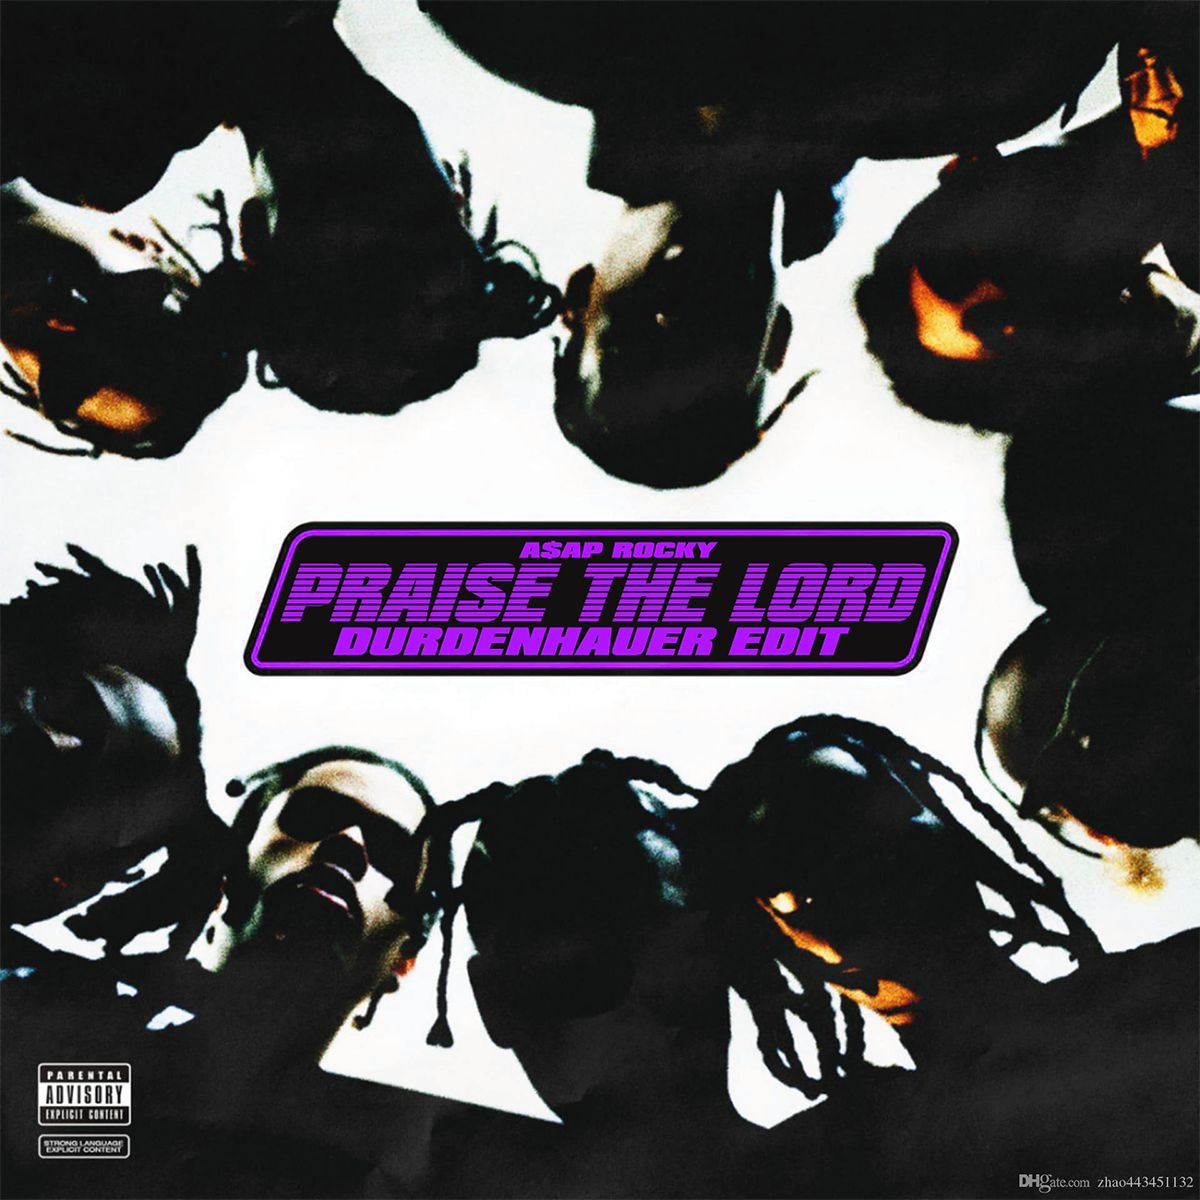 Преузимање A$AP ROCKY - Praise the Lord (DURDENHAUER Edit) [FREE DOWNLOAD]